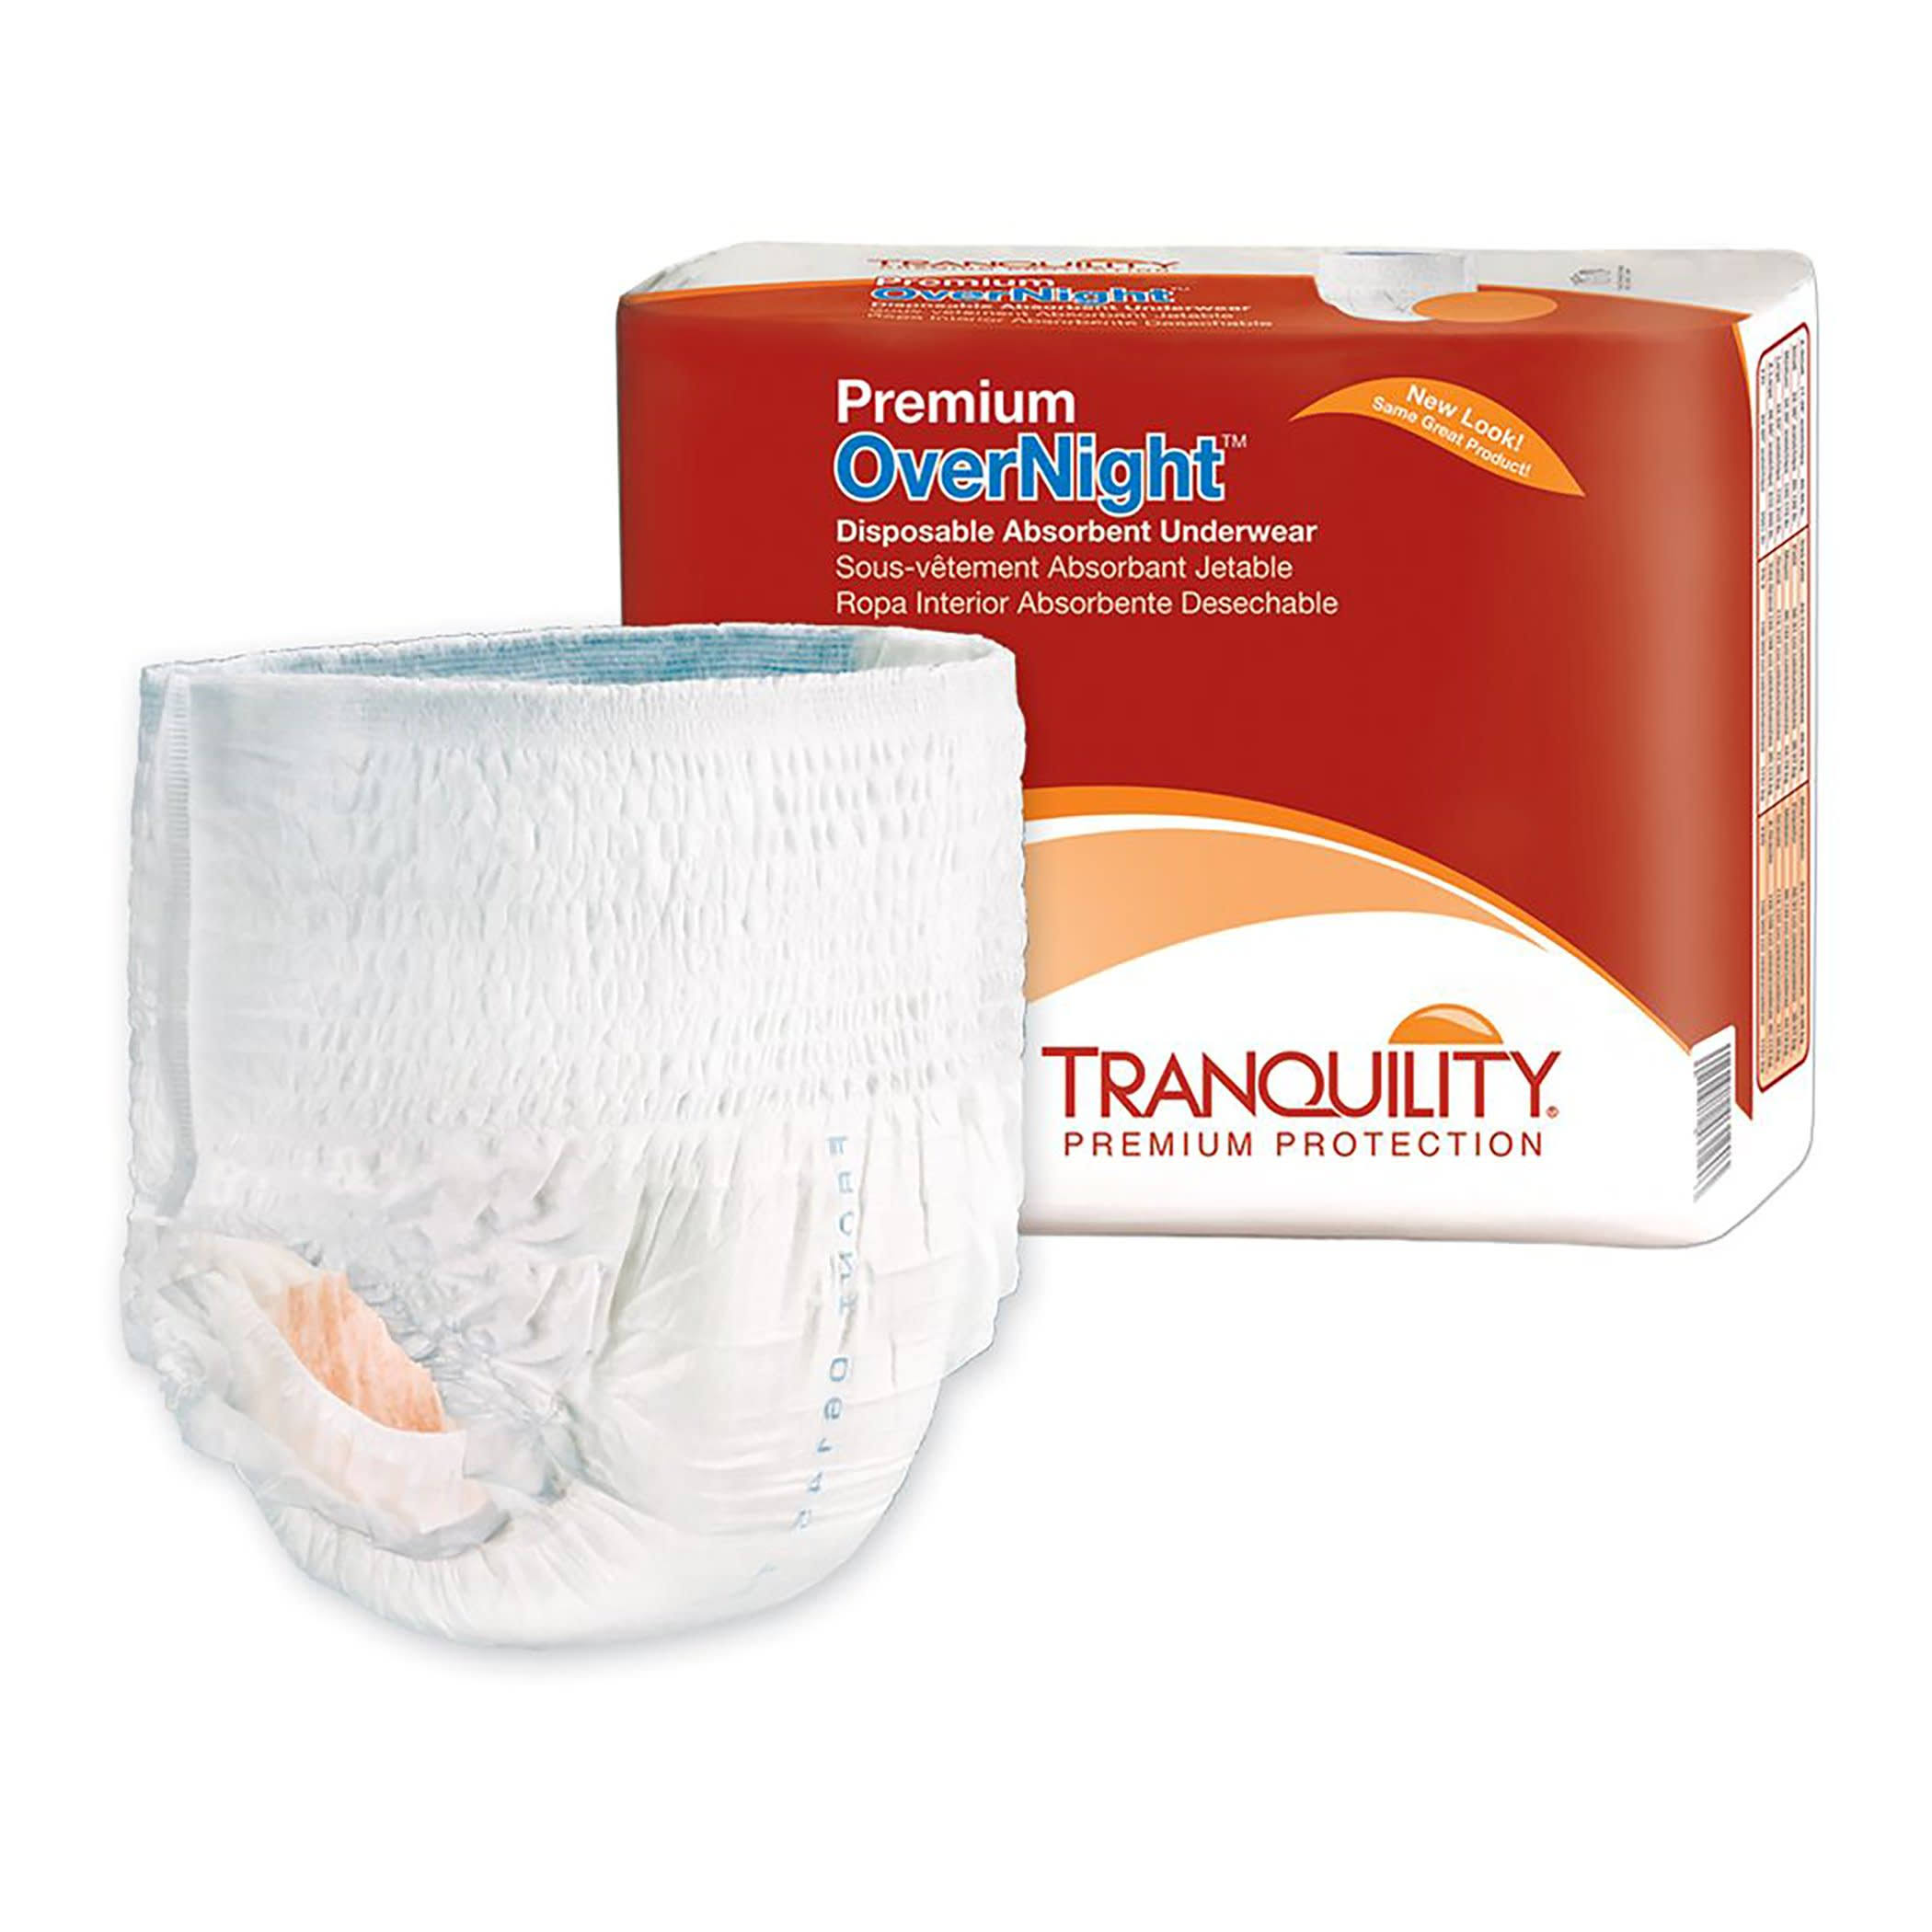 Tranquility Premium Overnight Disposable Underwear - XSmall, 88ct